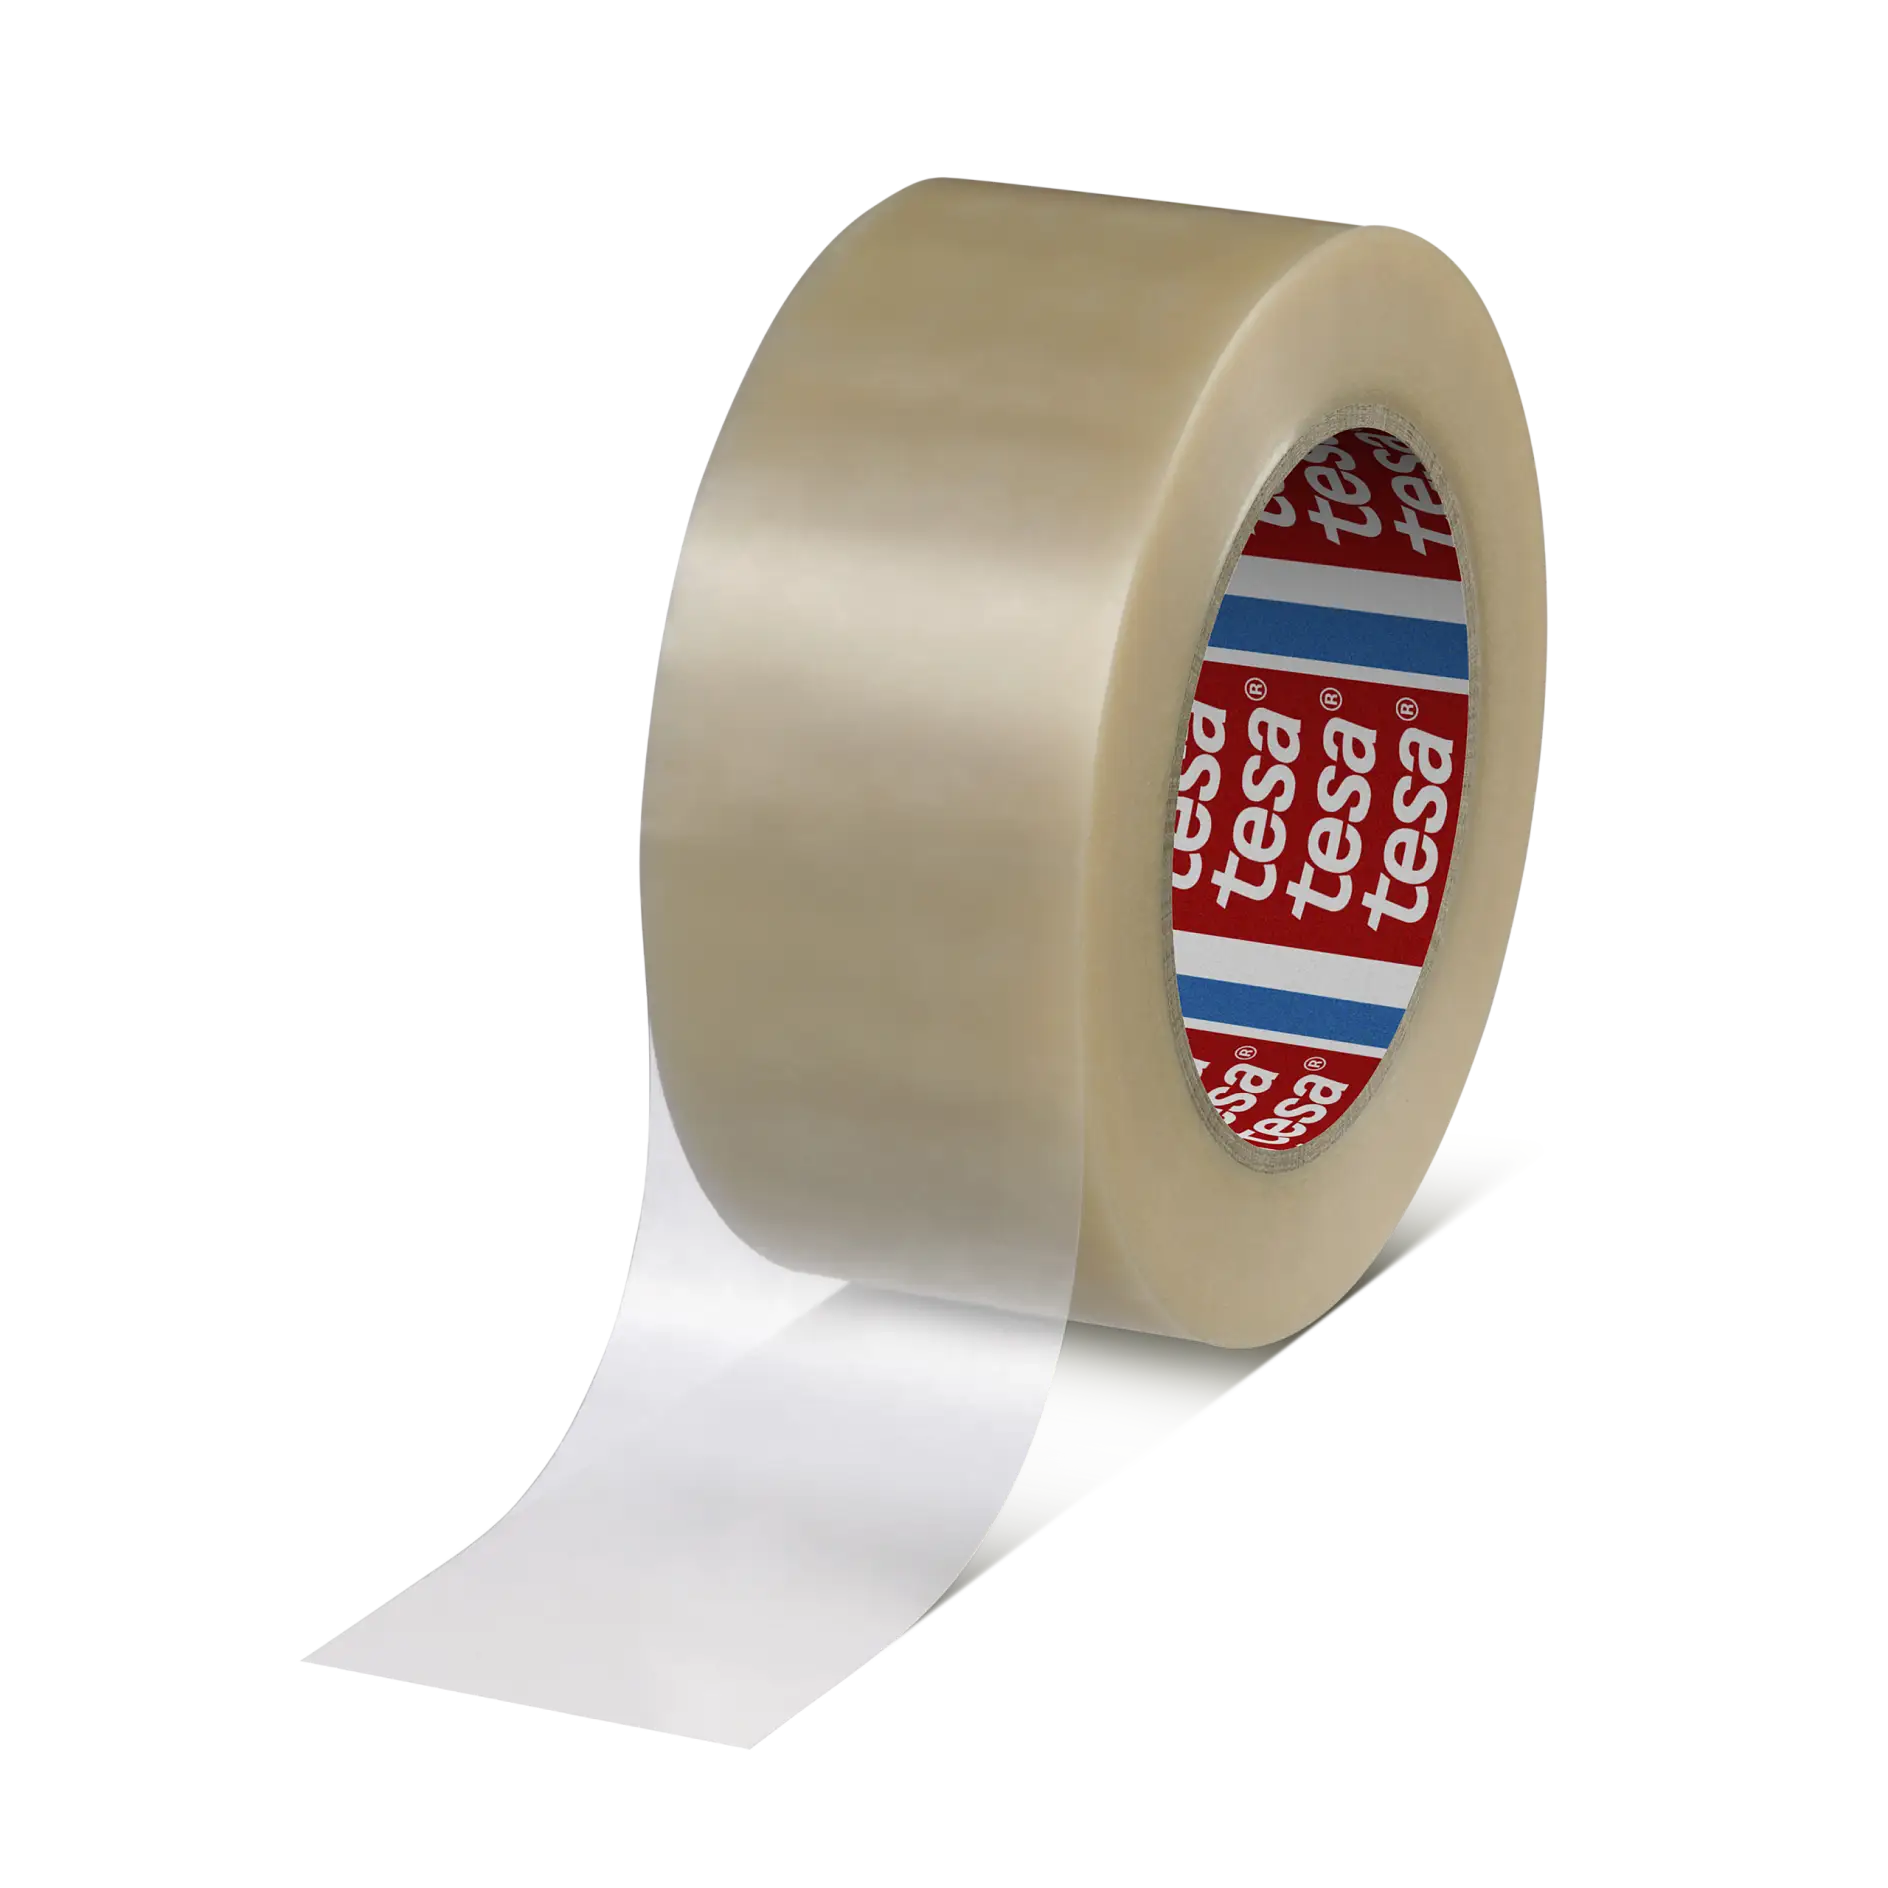 tesa-4122-heavy-duty-carton-sealing-tape-transparent-041220000900-pr